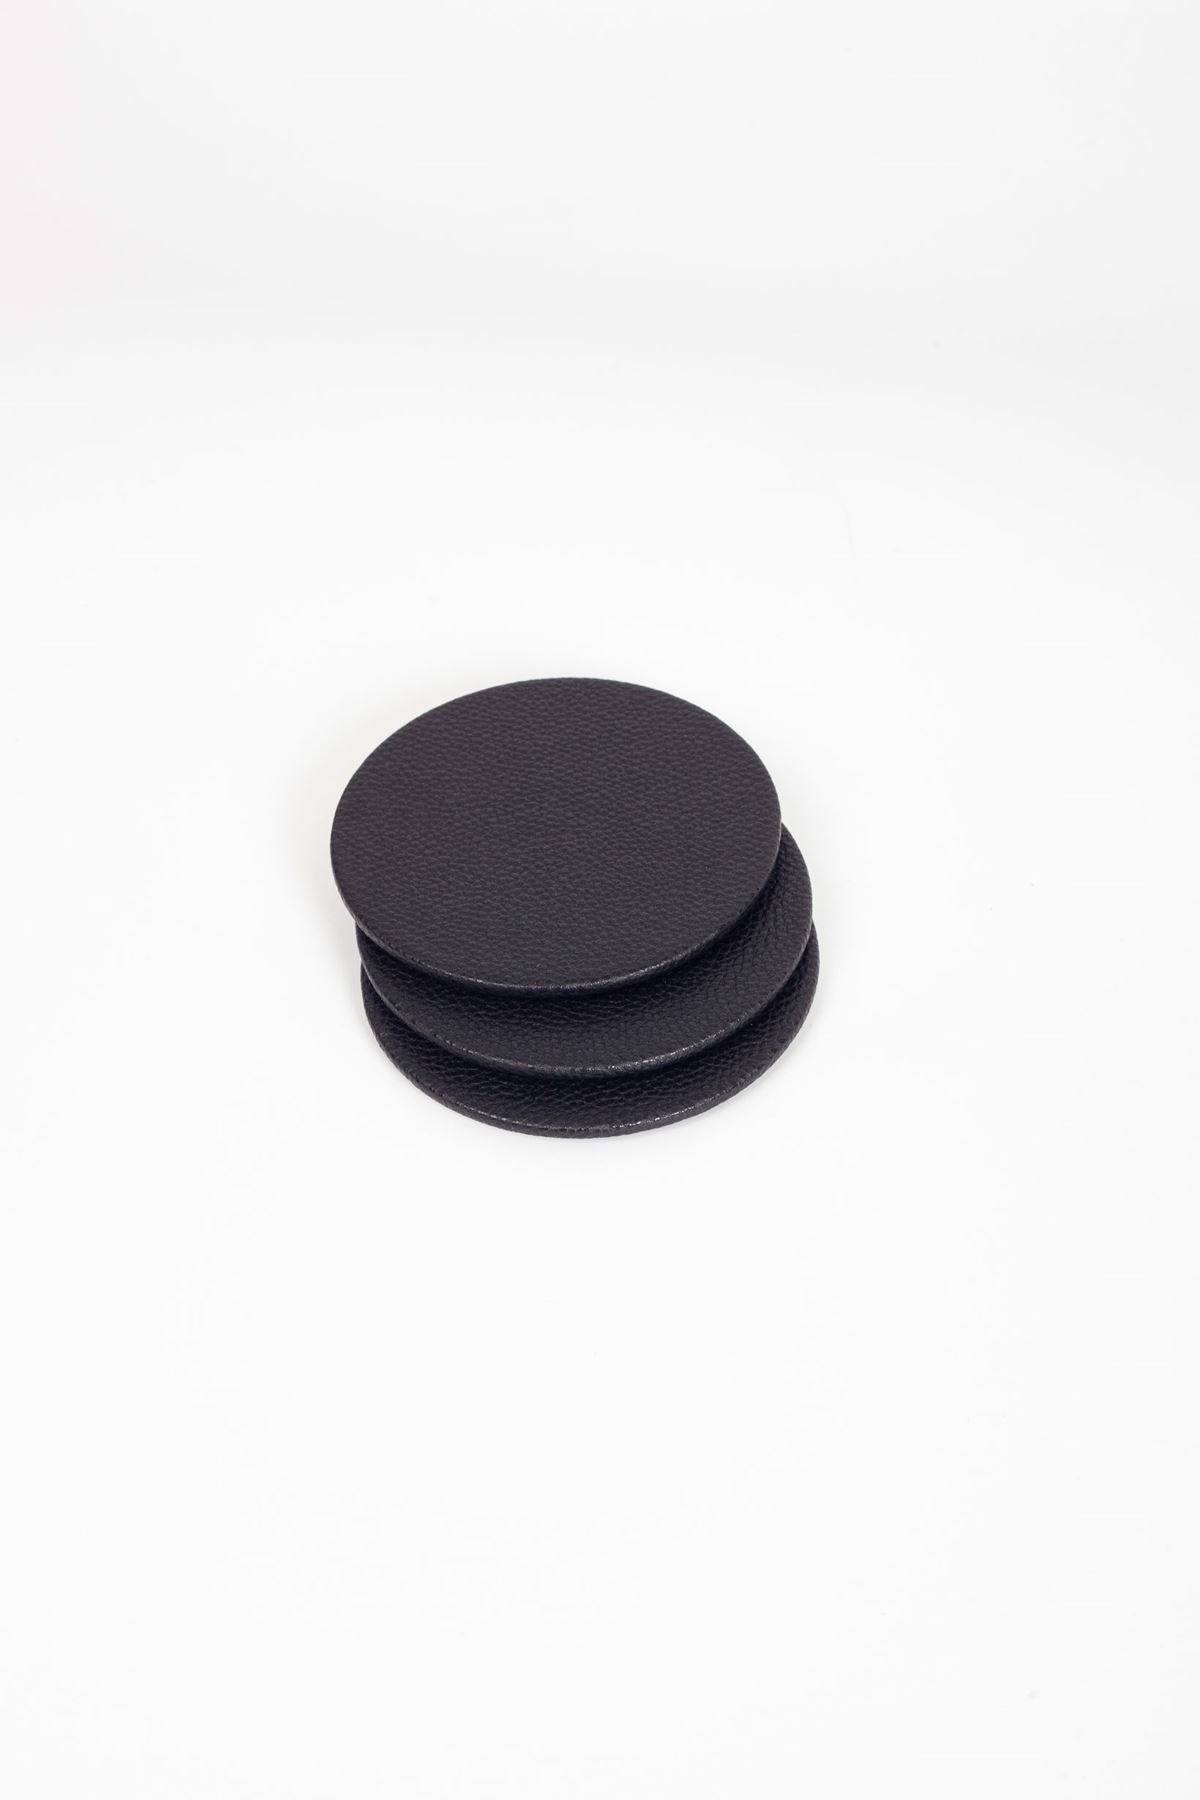 Leather Oval Coaster Black 3 Pcs